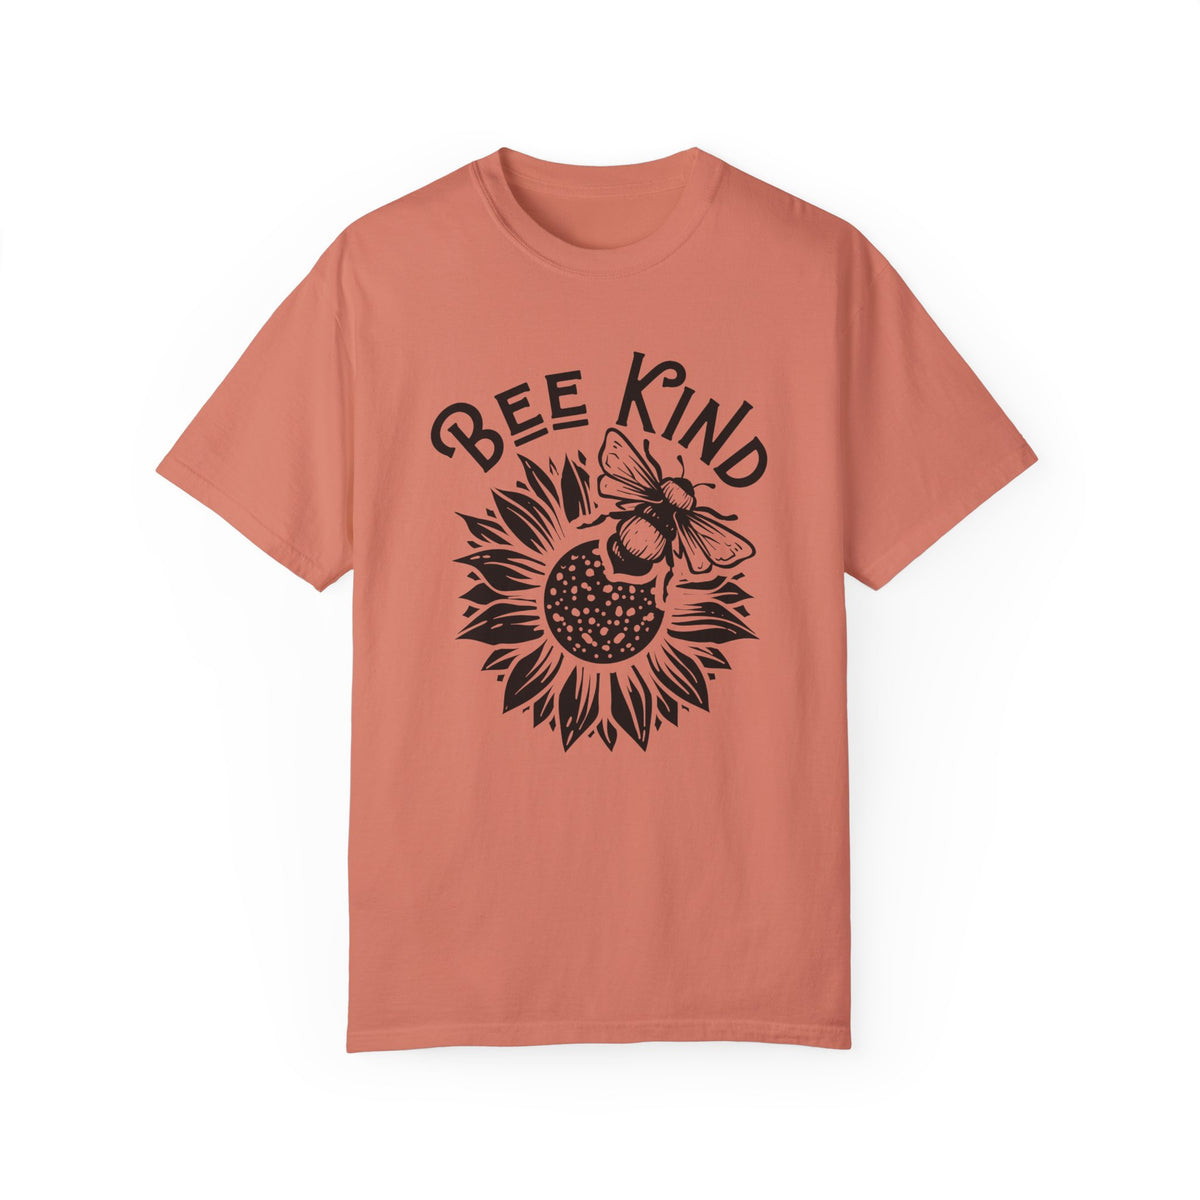 Be Kind Cute Bee Shirt | Bee Kind Sunflower Shirt | Nature Lover Gift for Her | Kindness Shirt | Unisex Garment-Dyed T-shirt